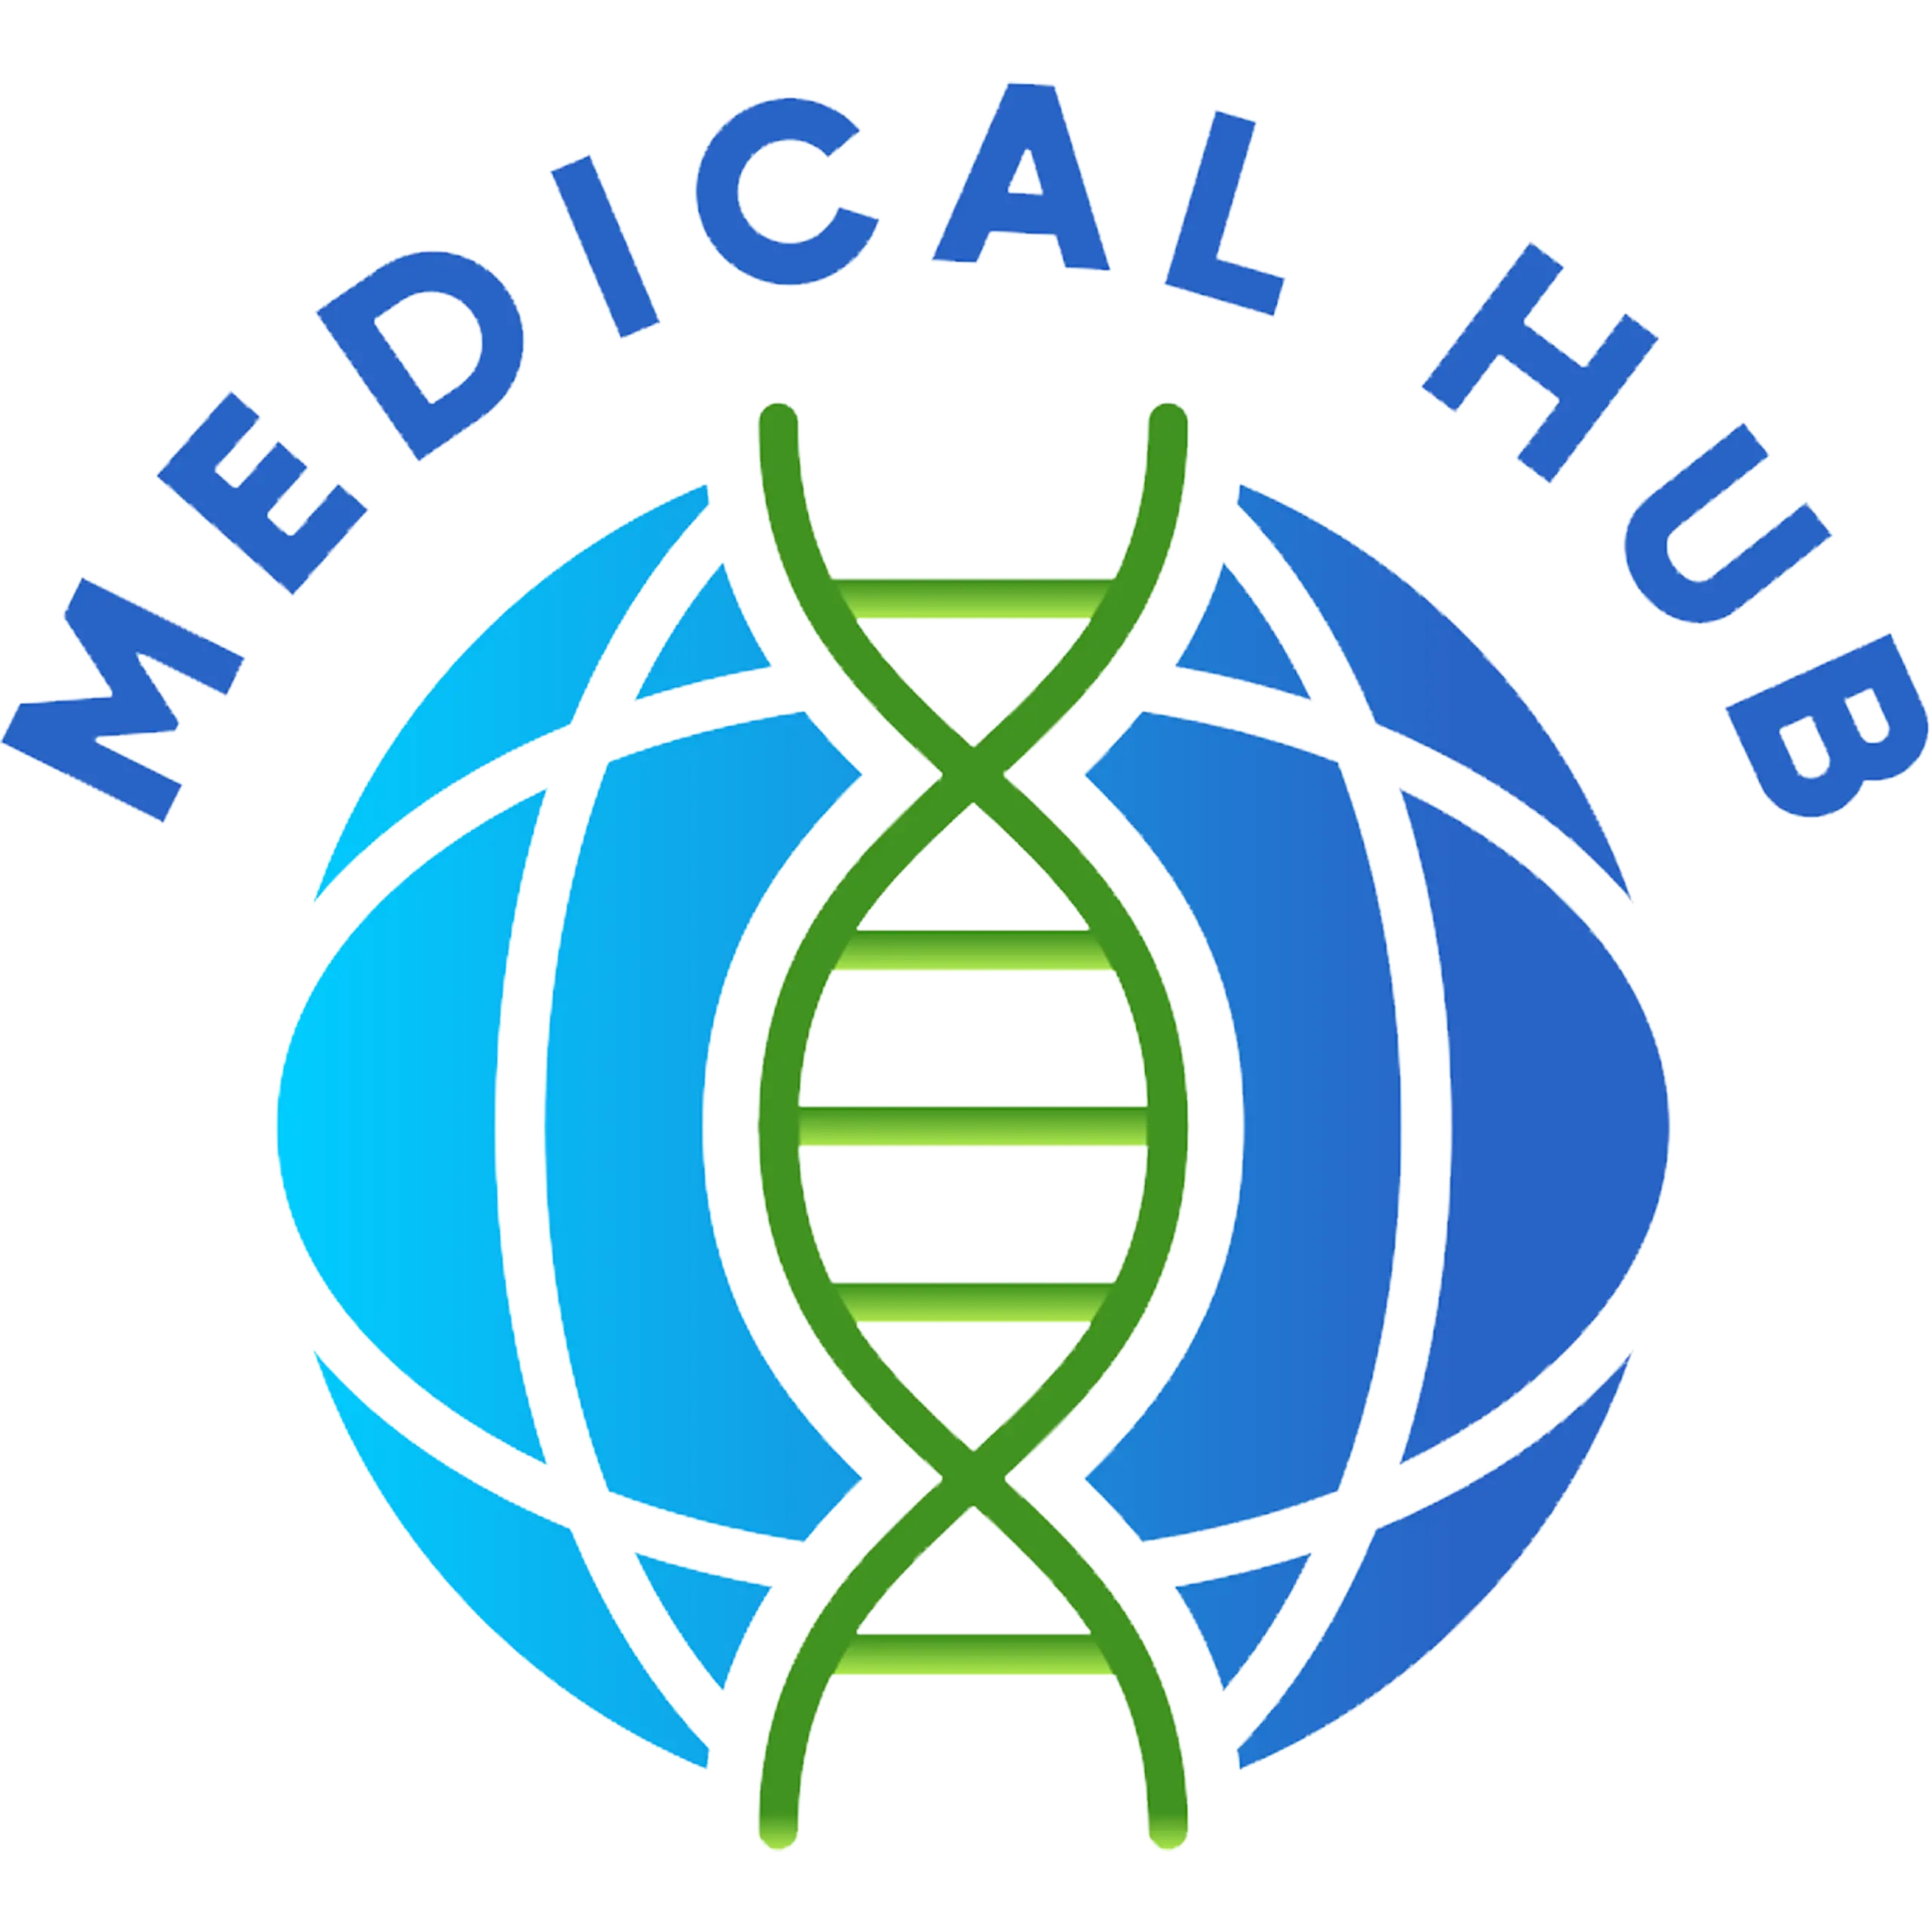 Medical Hub